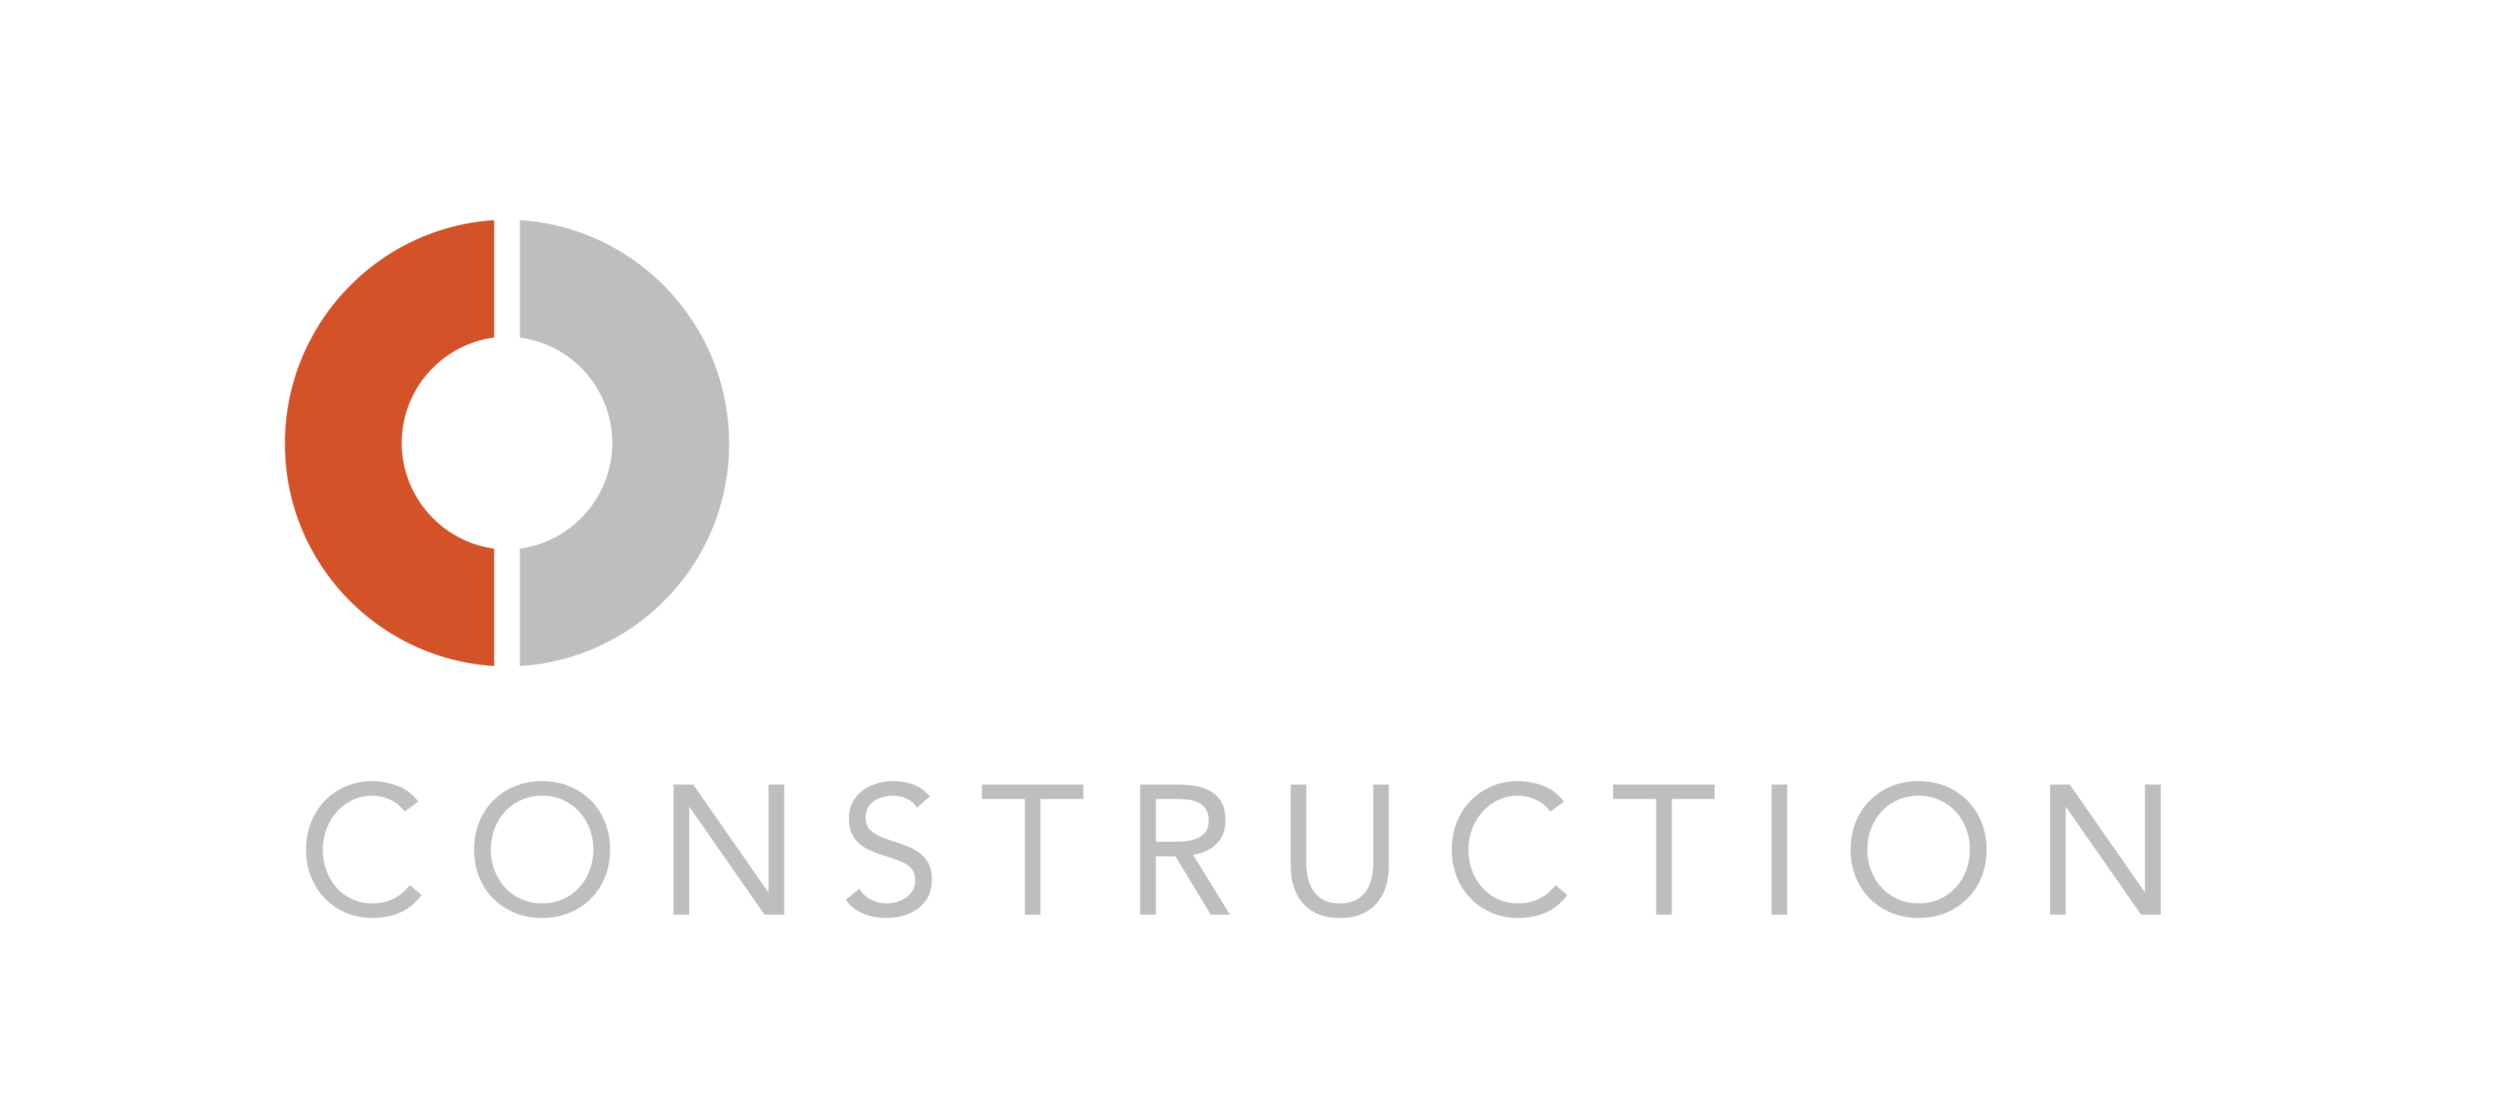 H.J. Okeefe Construction